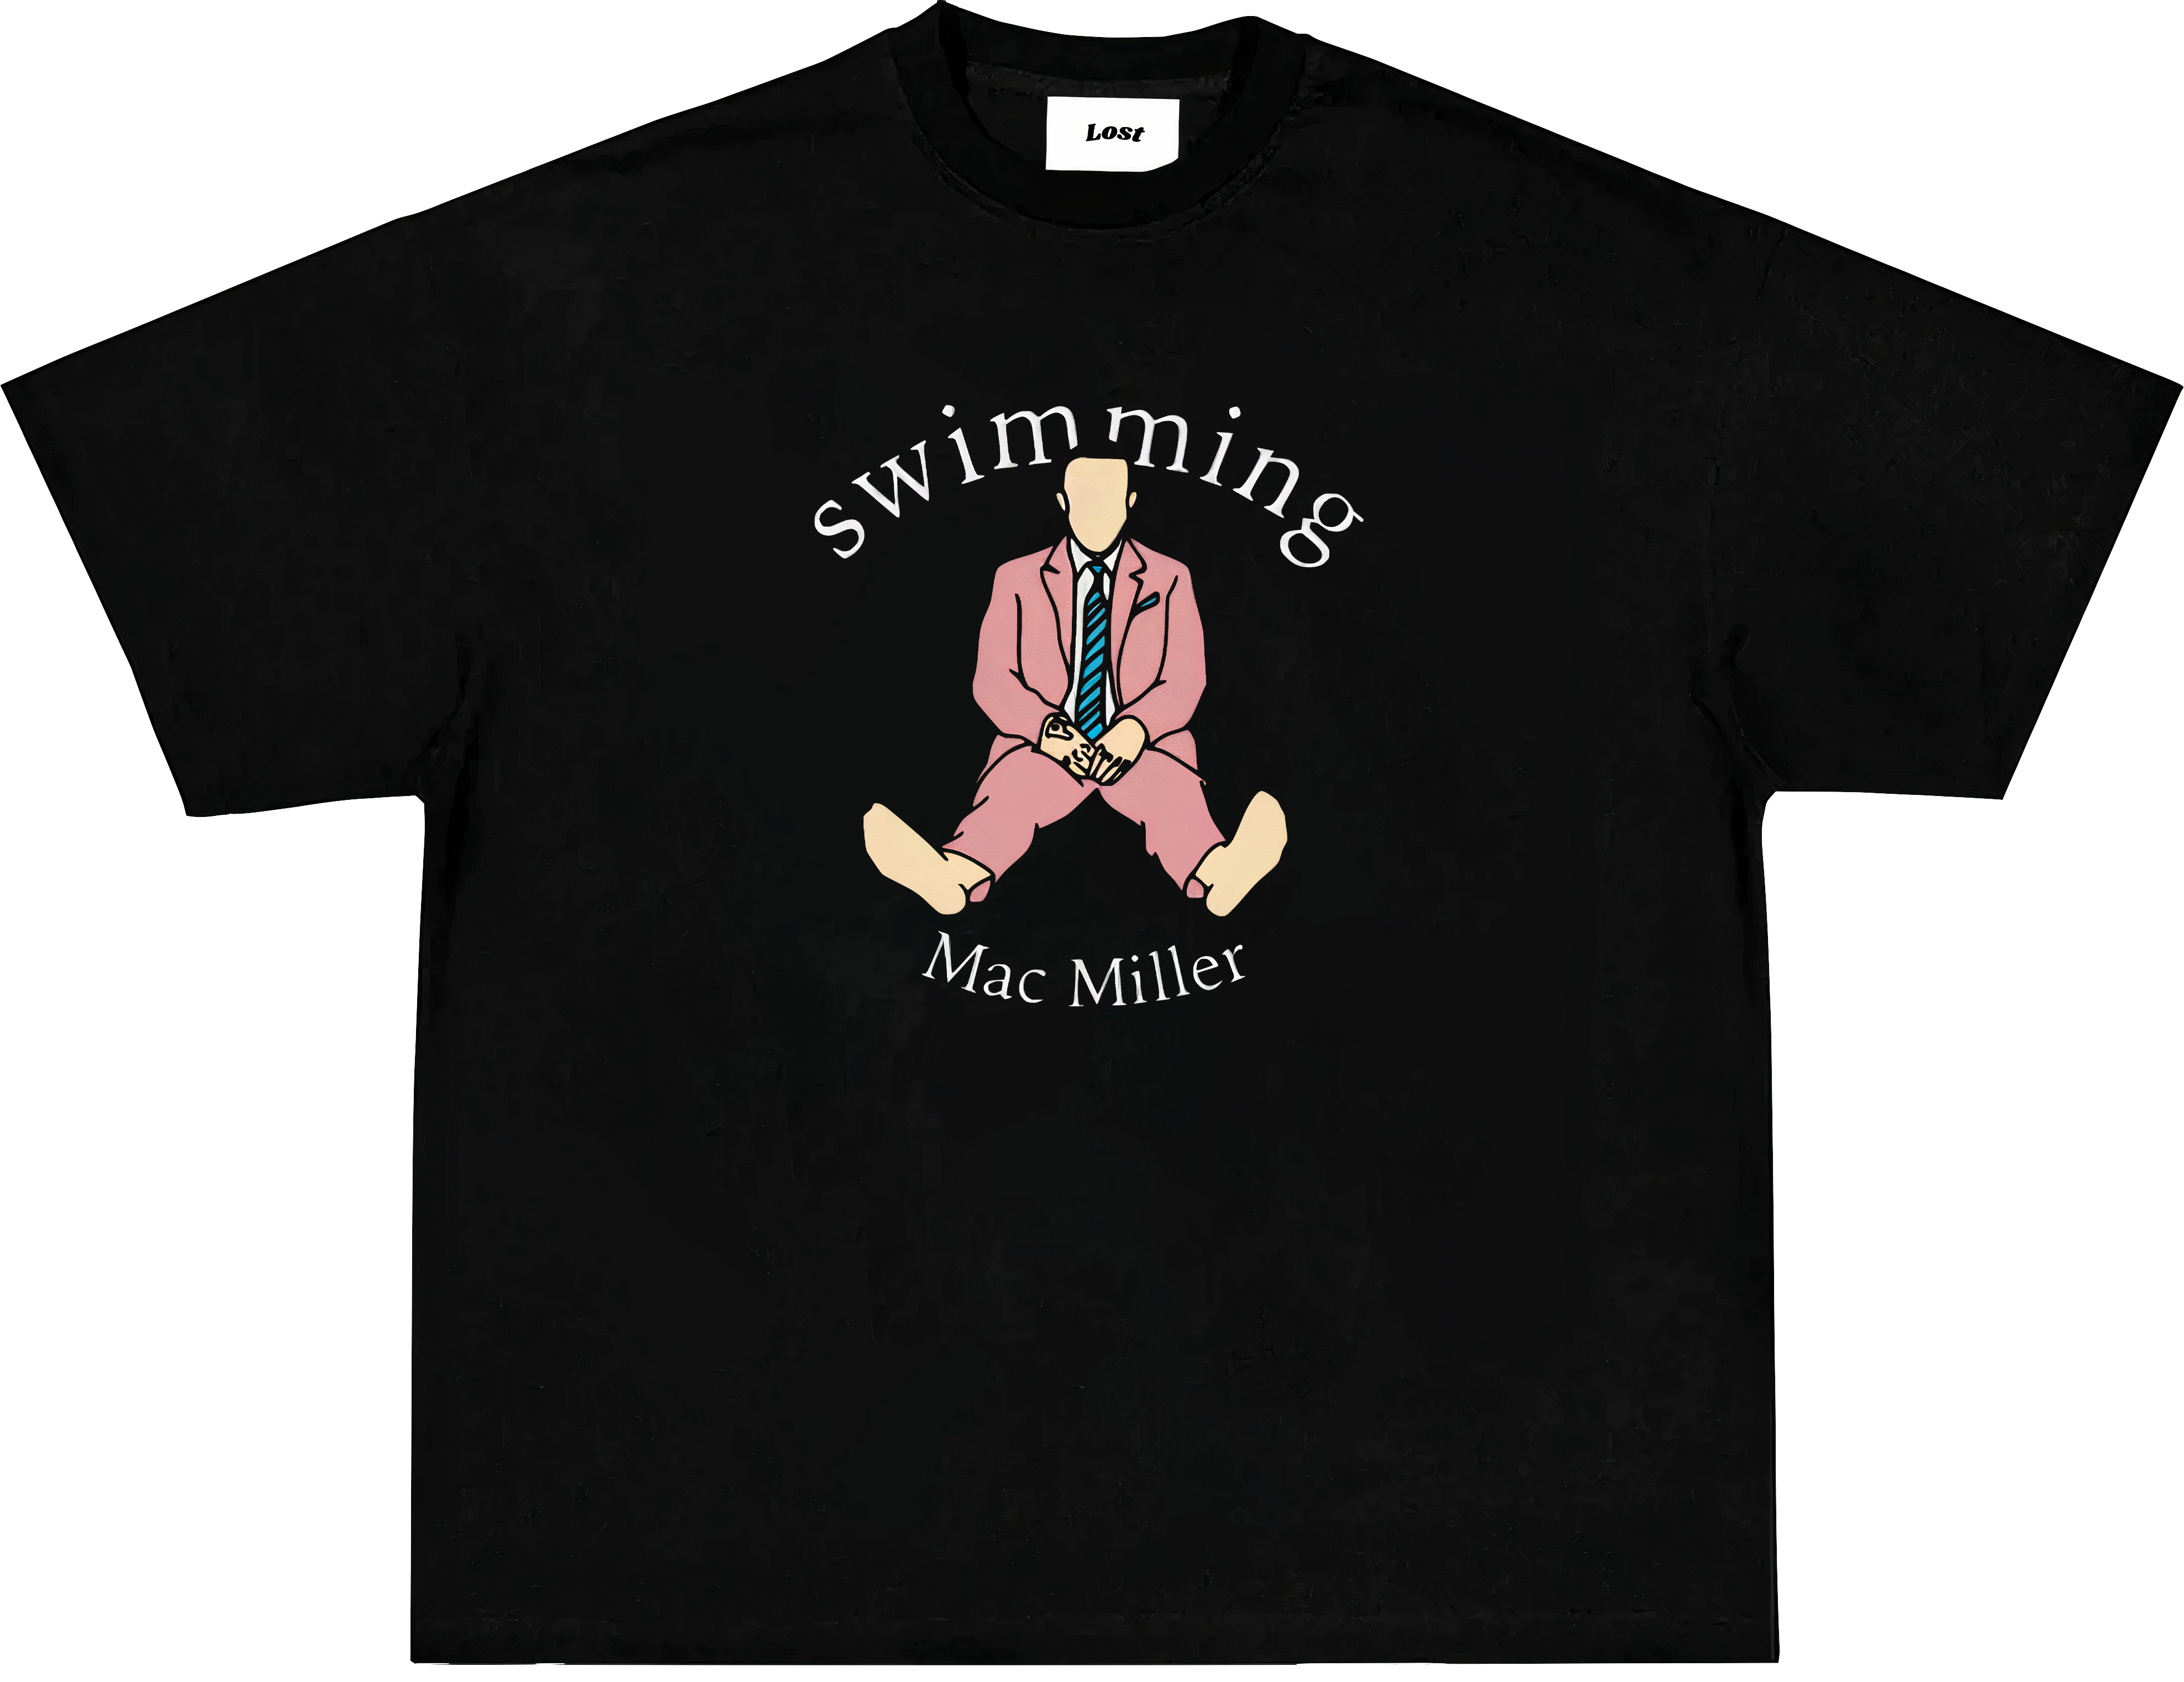 MAC MILLER "Swimming" Oversized T-shirt